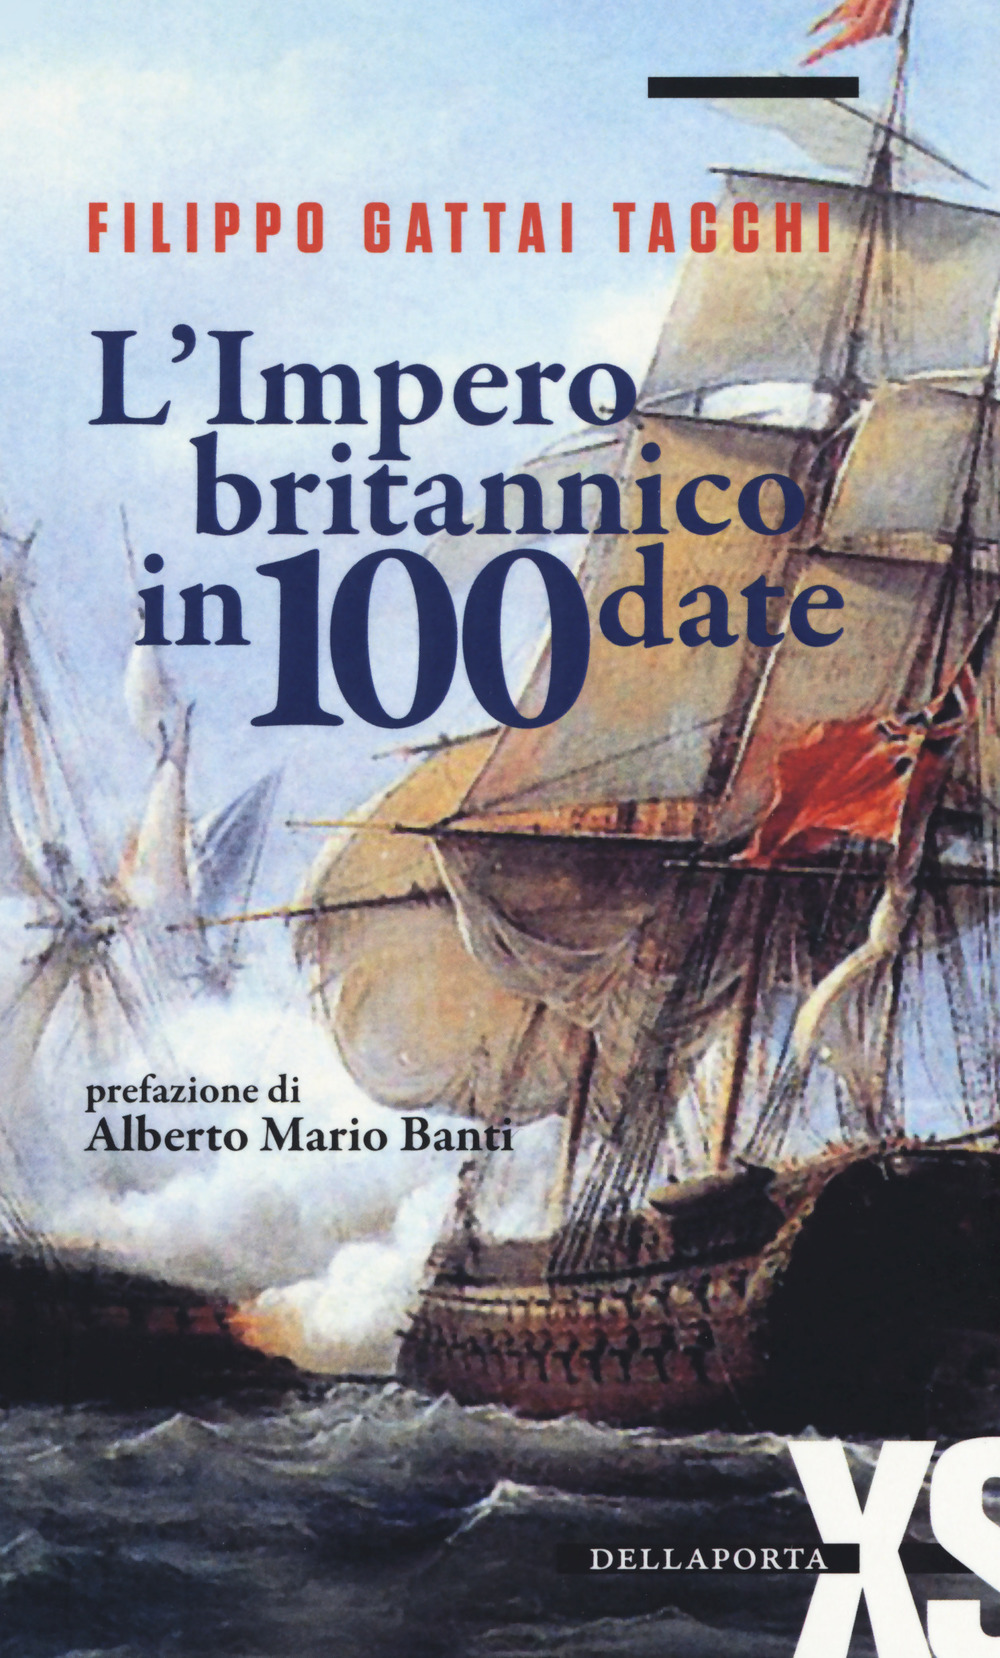 L'impero britannico in 100 date